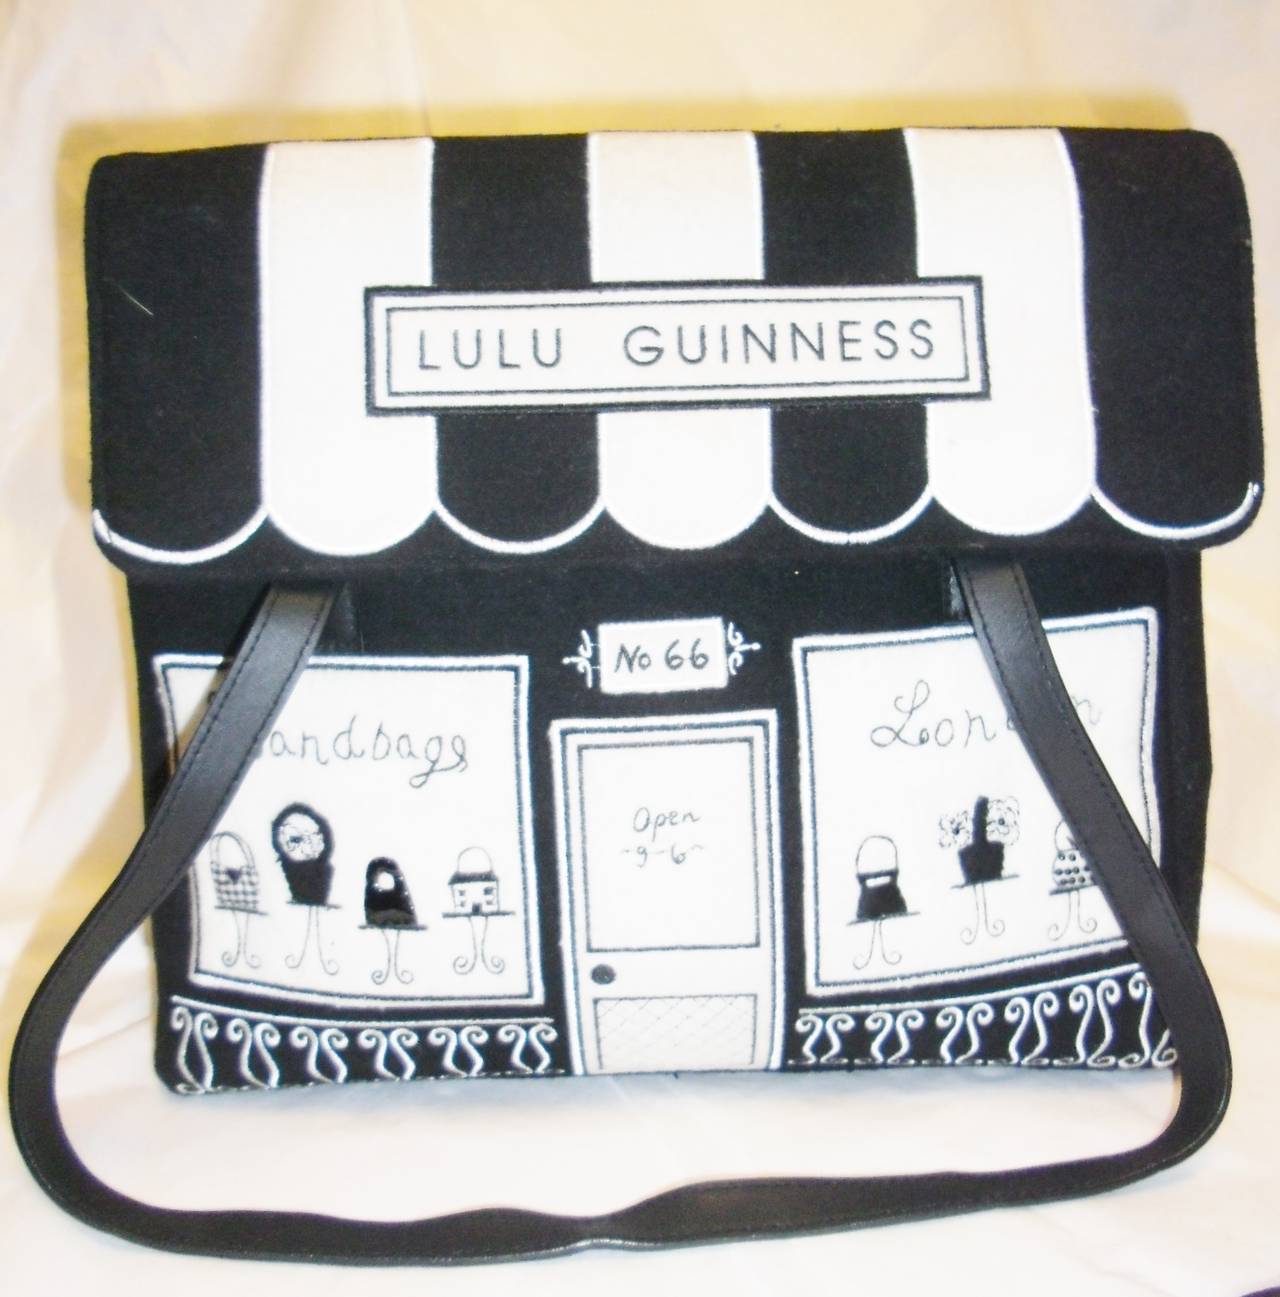 lulu guinness shop front bag